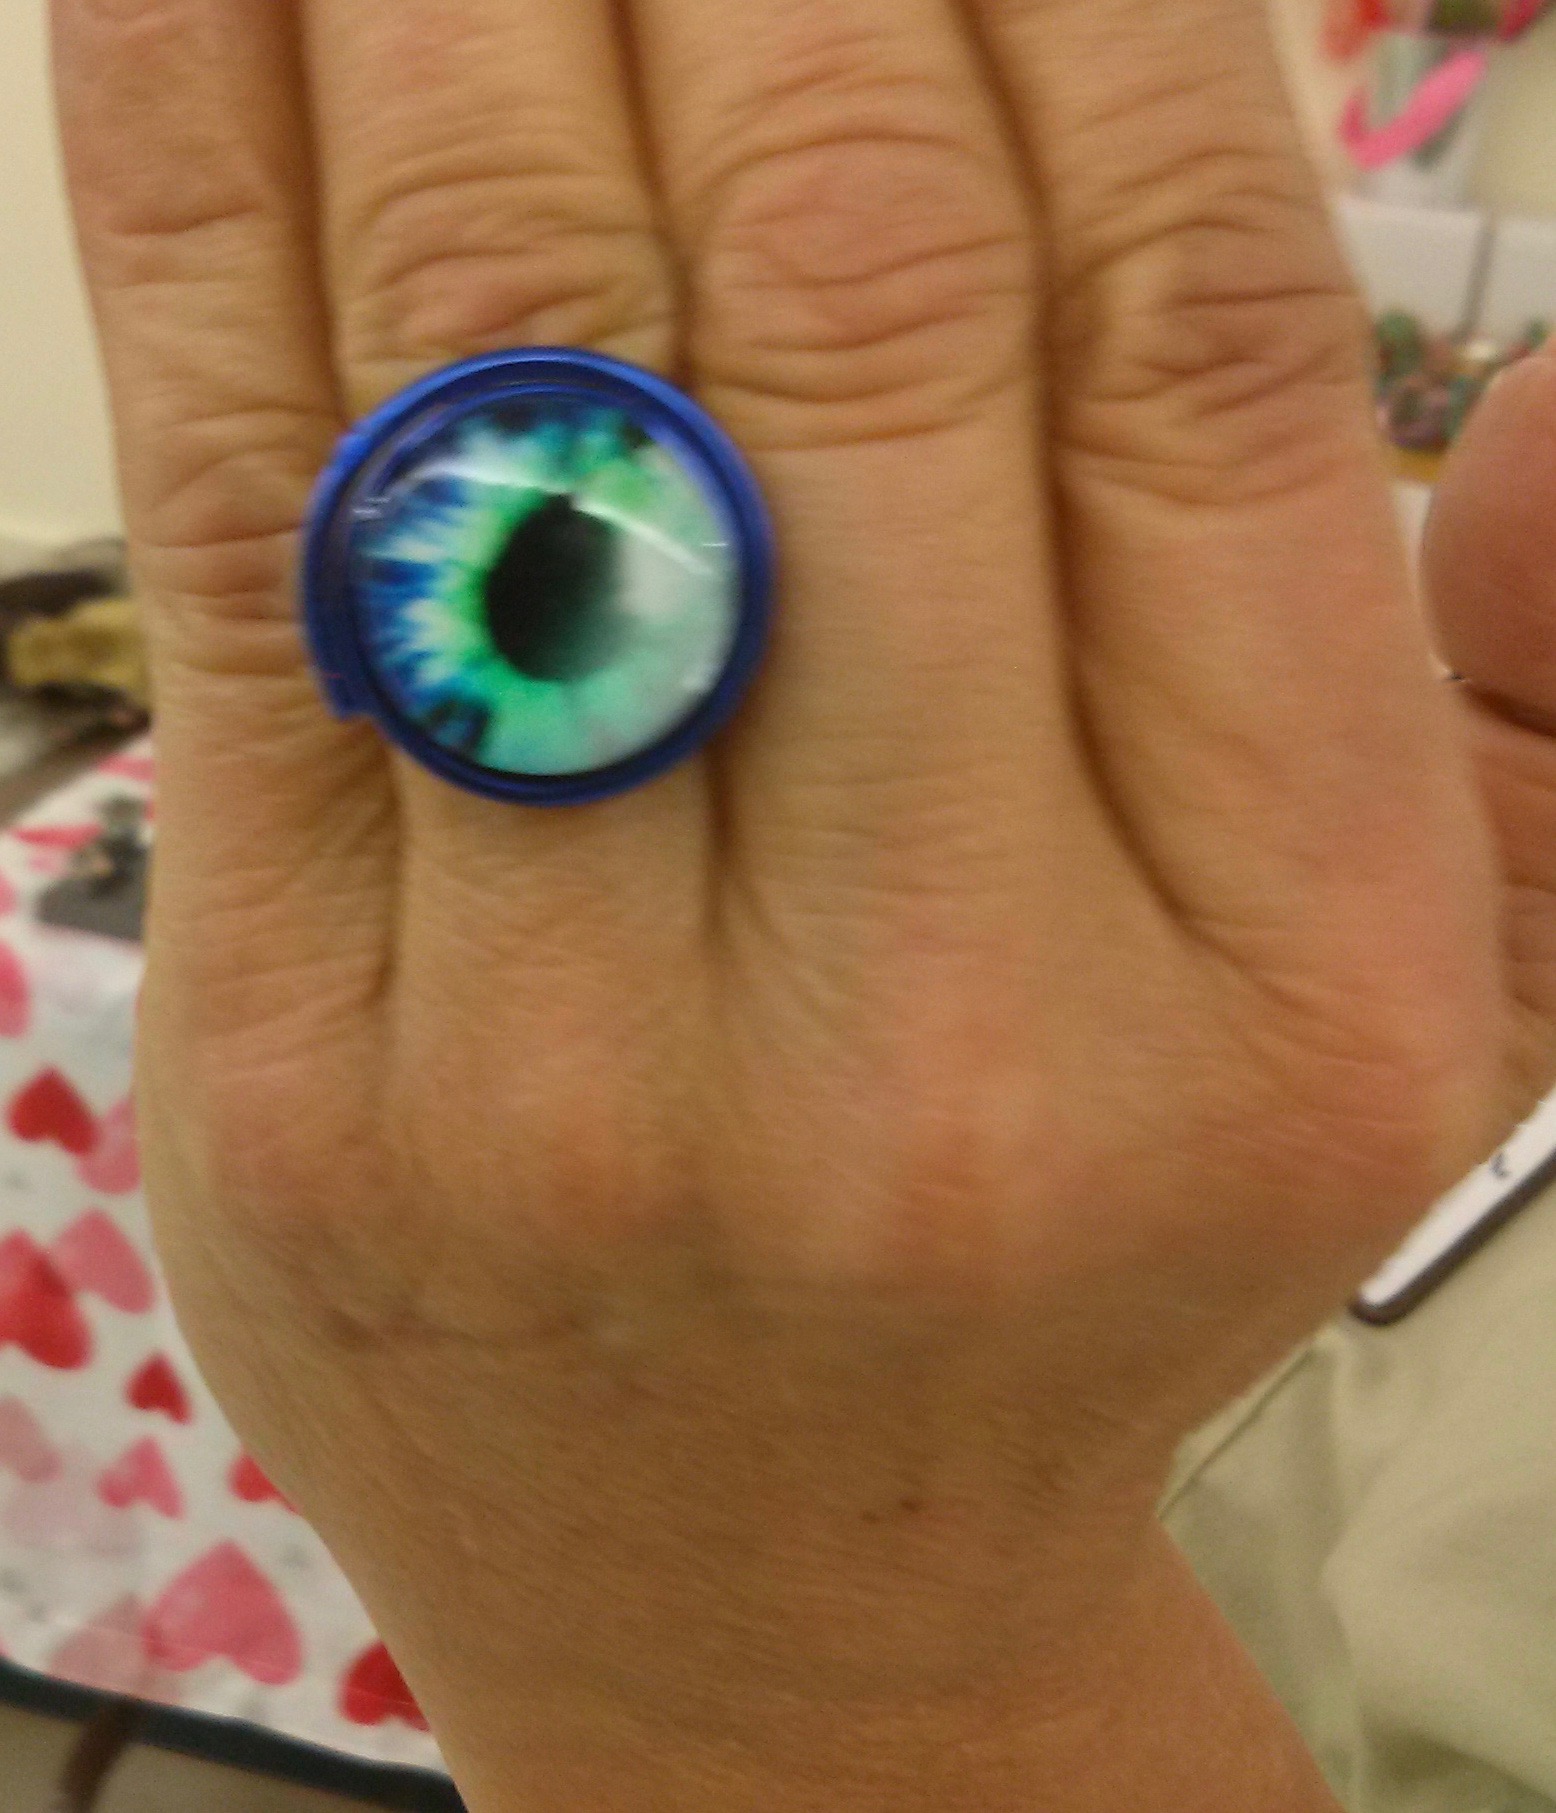 Customer & Nikus Ring with Cat Eye Glass @ USDA